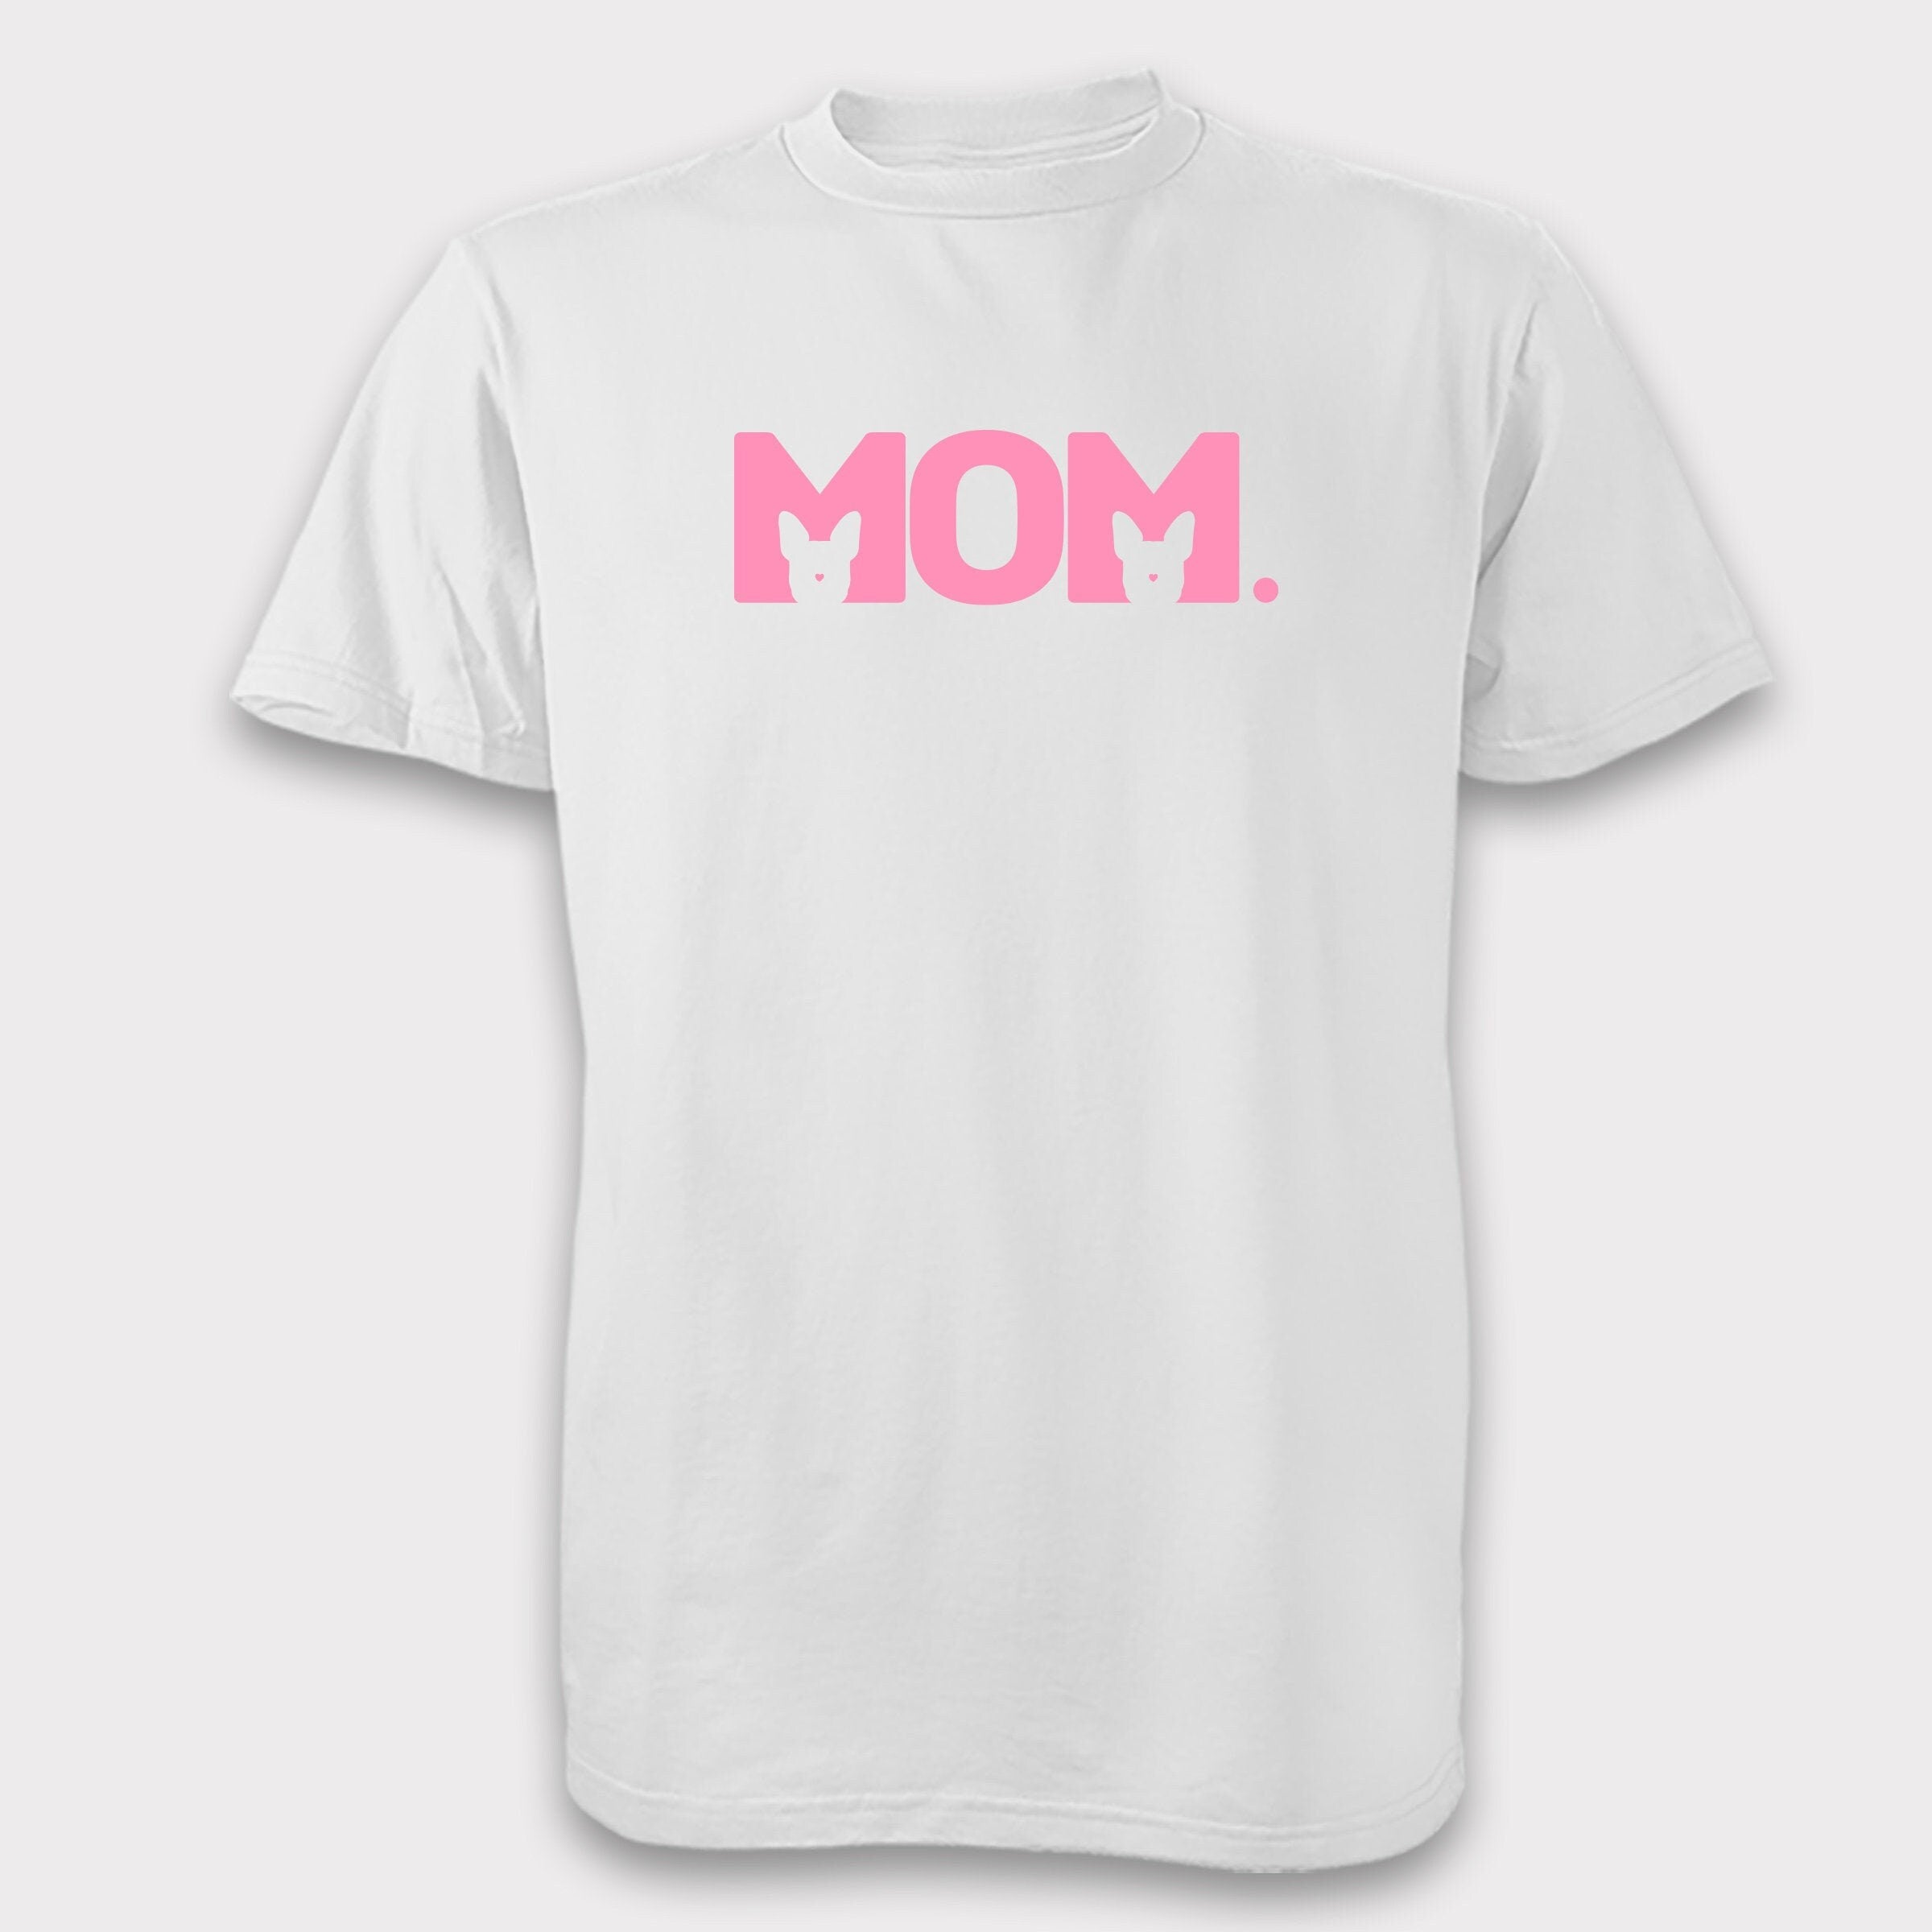 Mom Period. Unisex T-Shirt